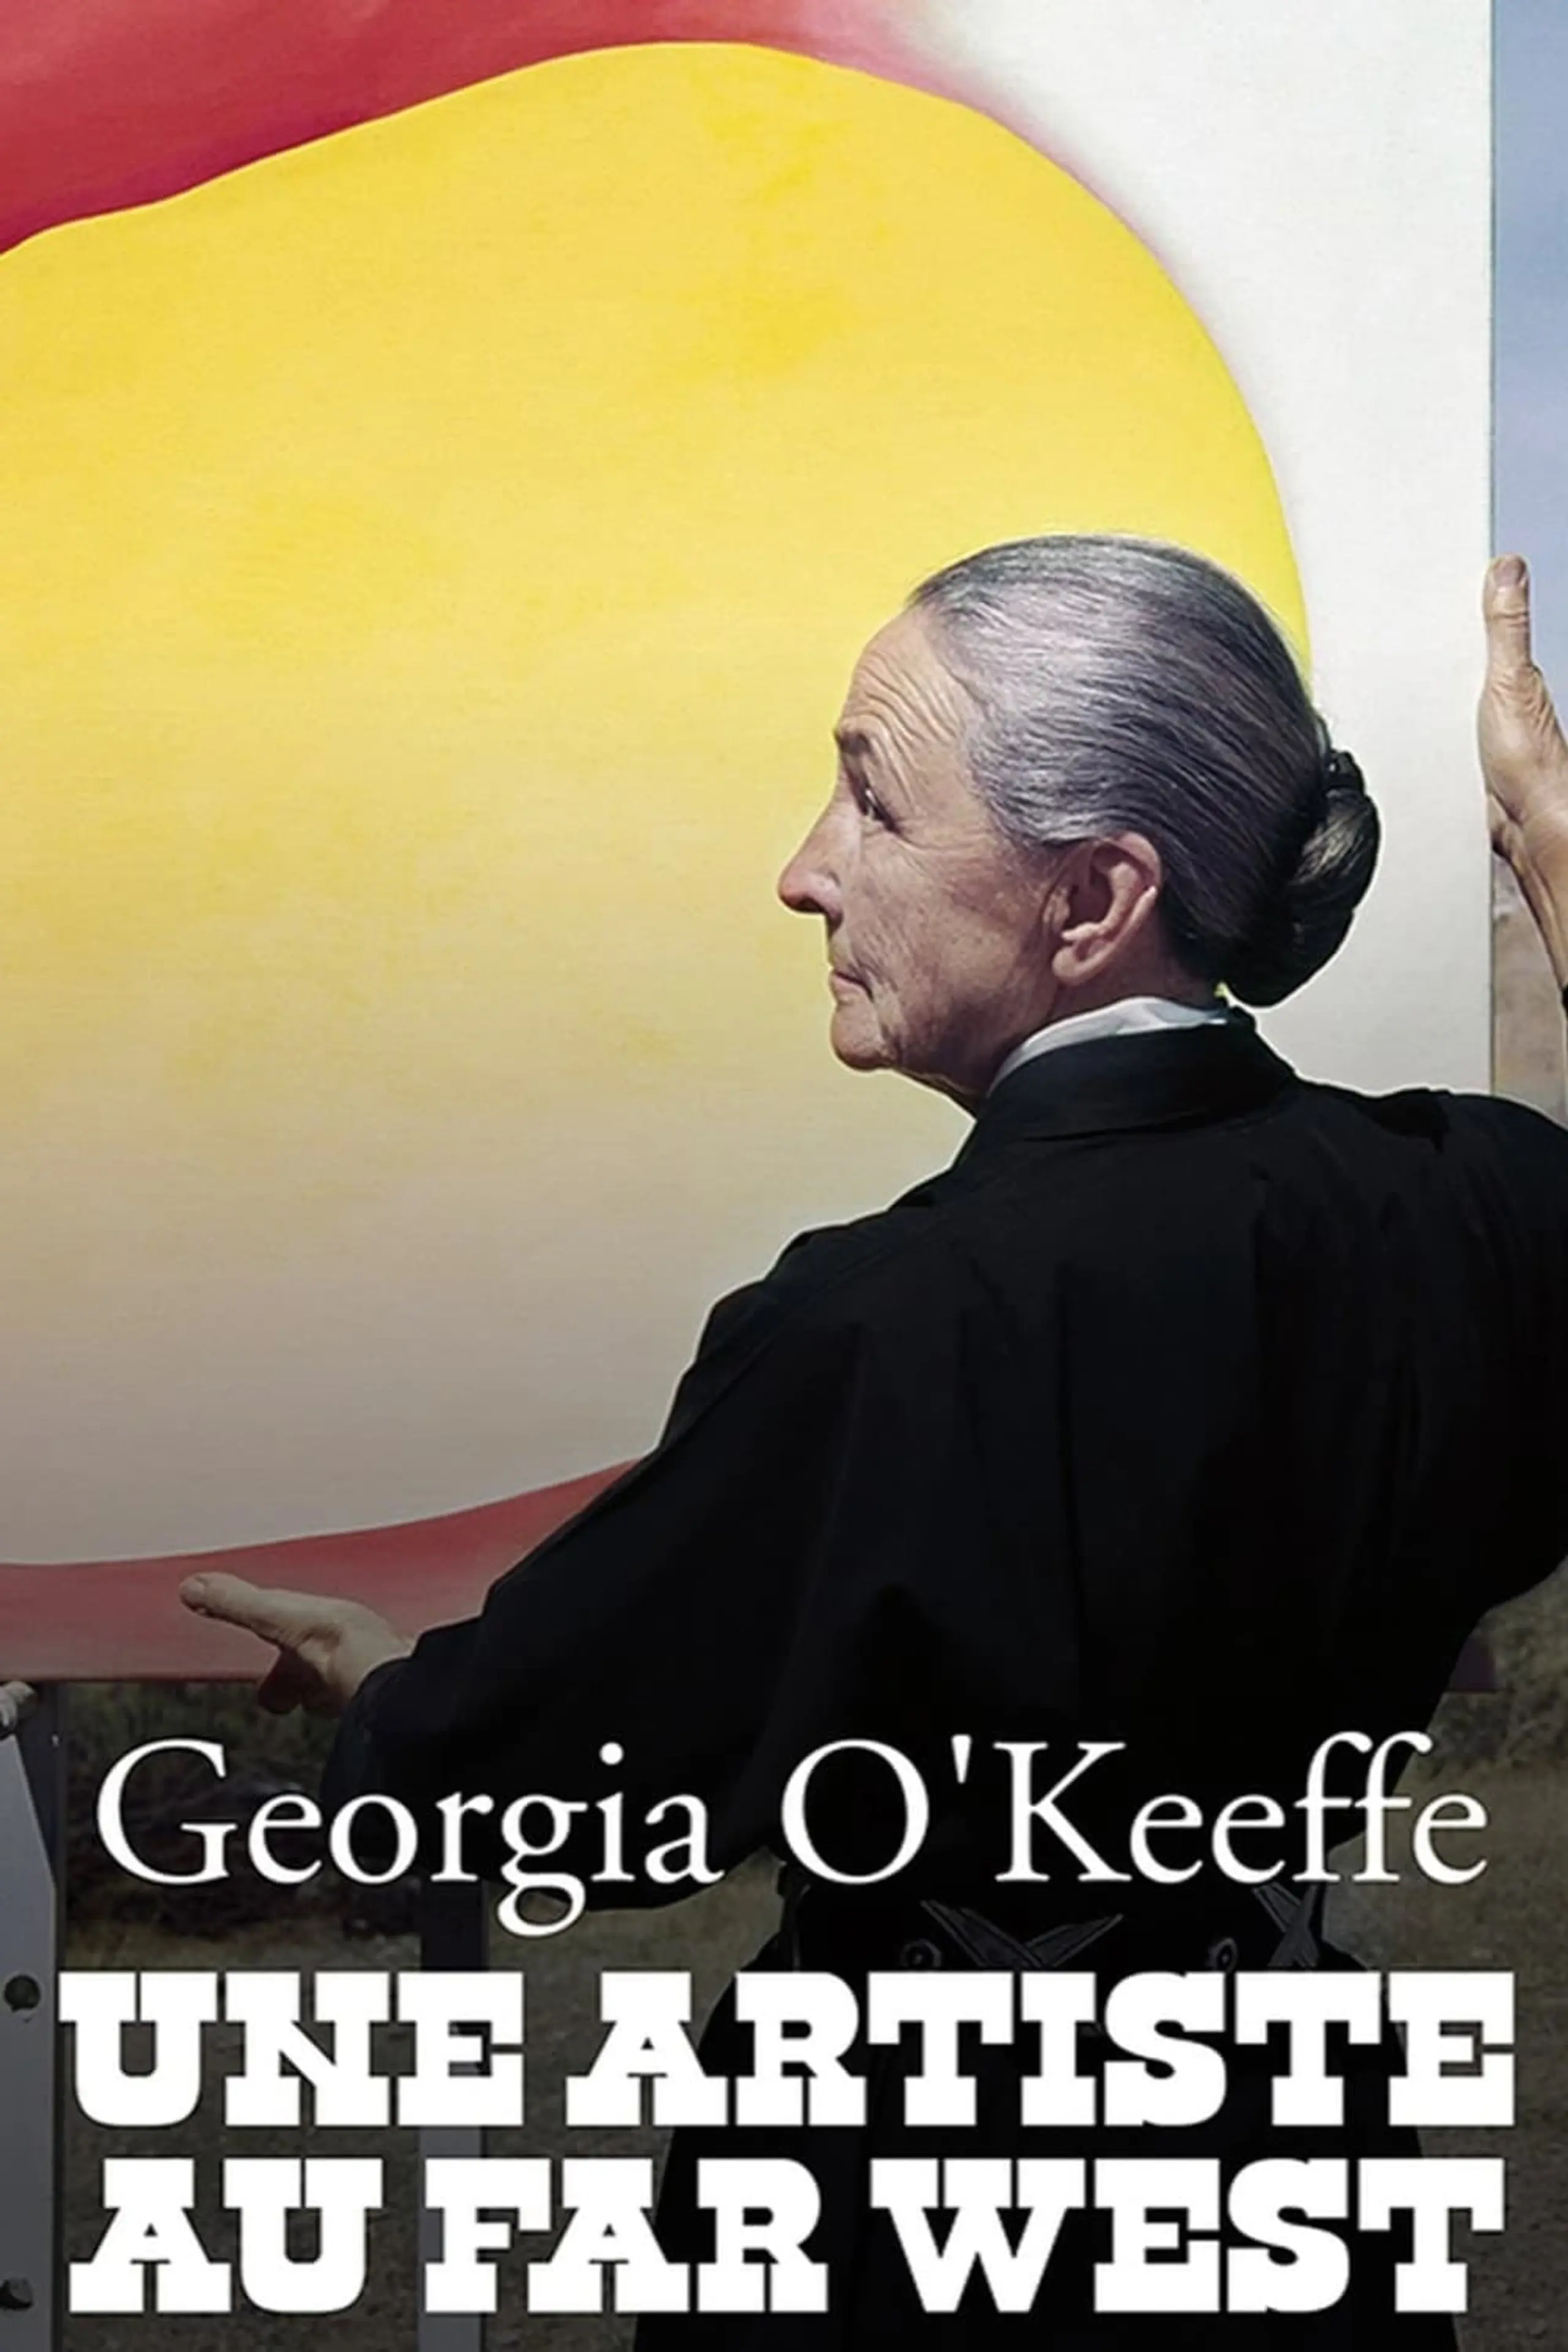 Georgia O'Keeffe, Painter of the Faraway